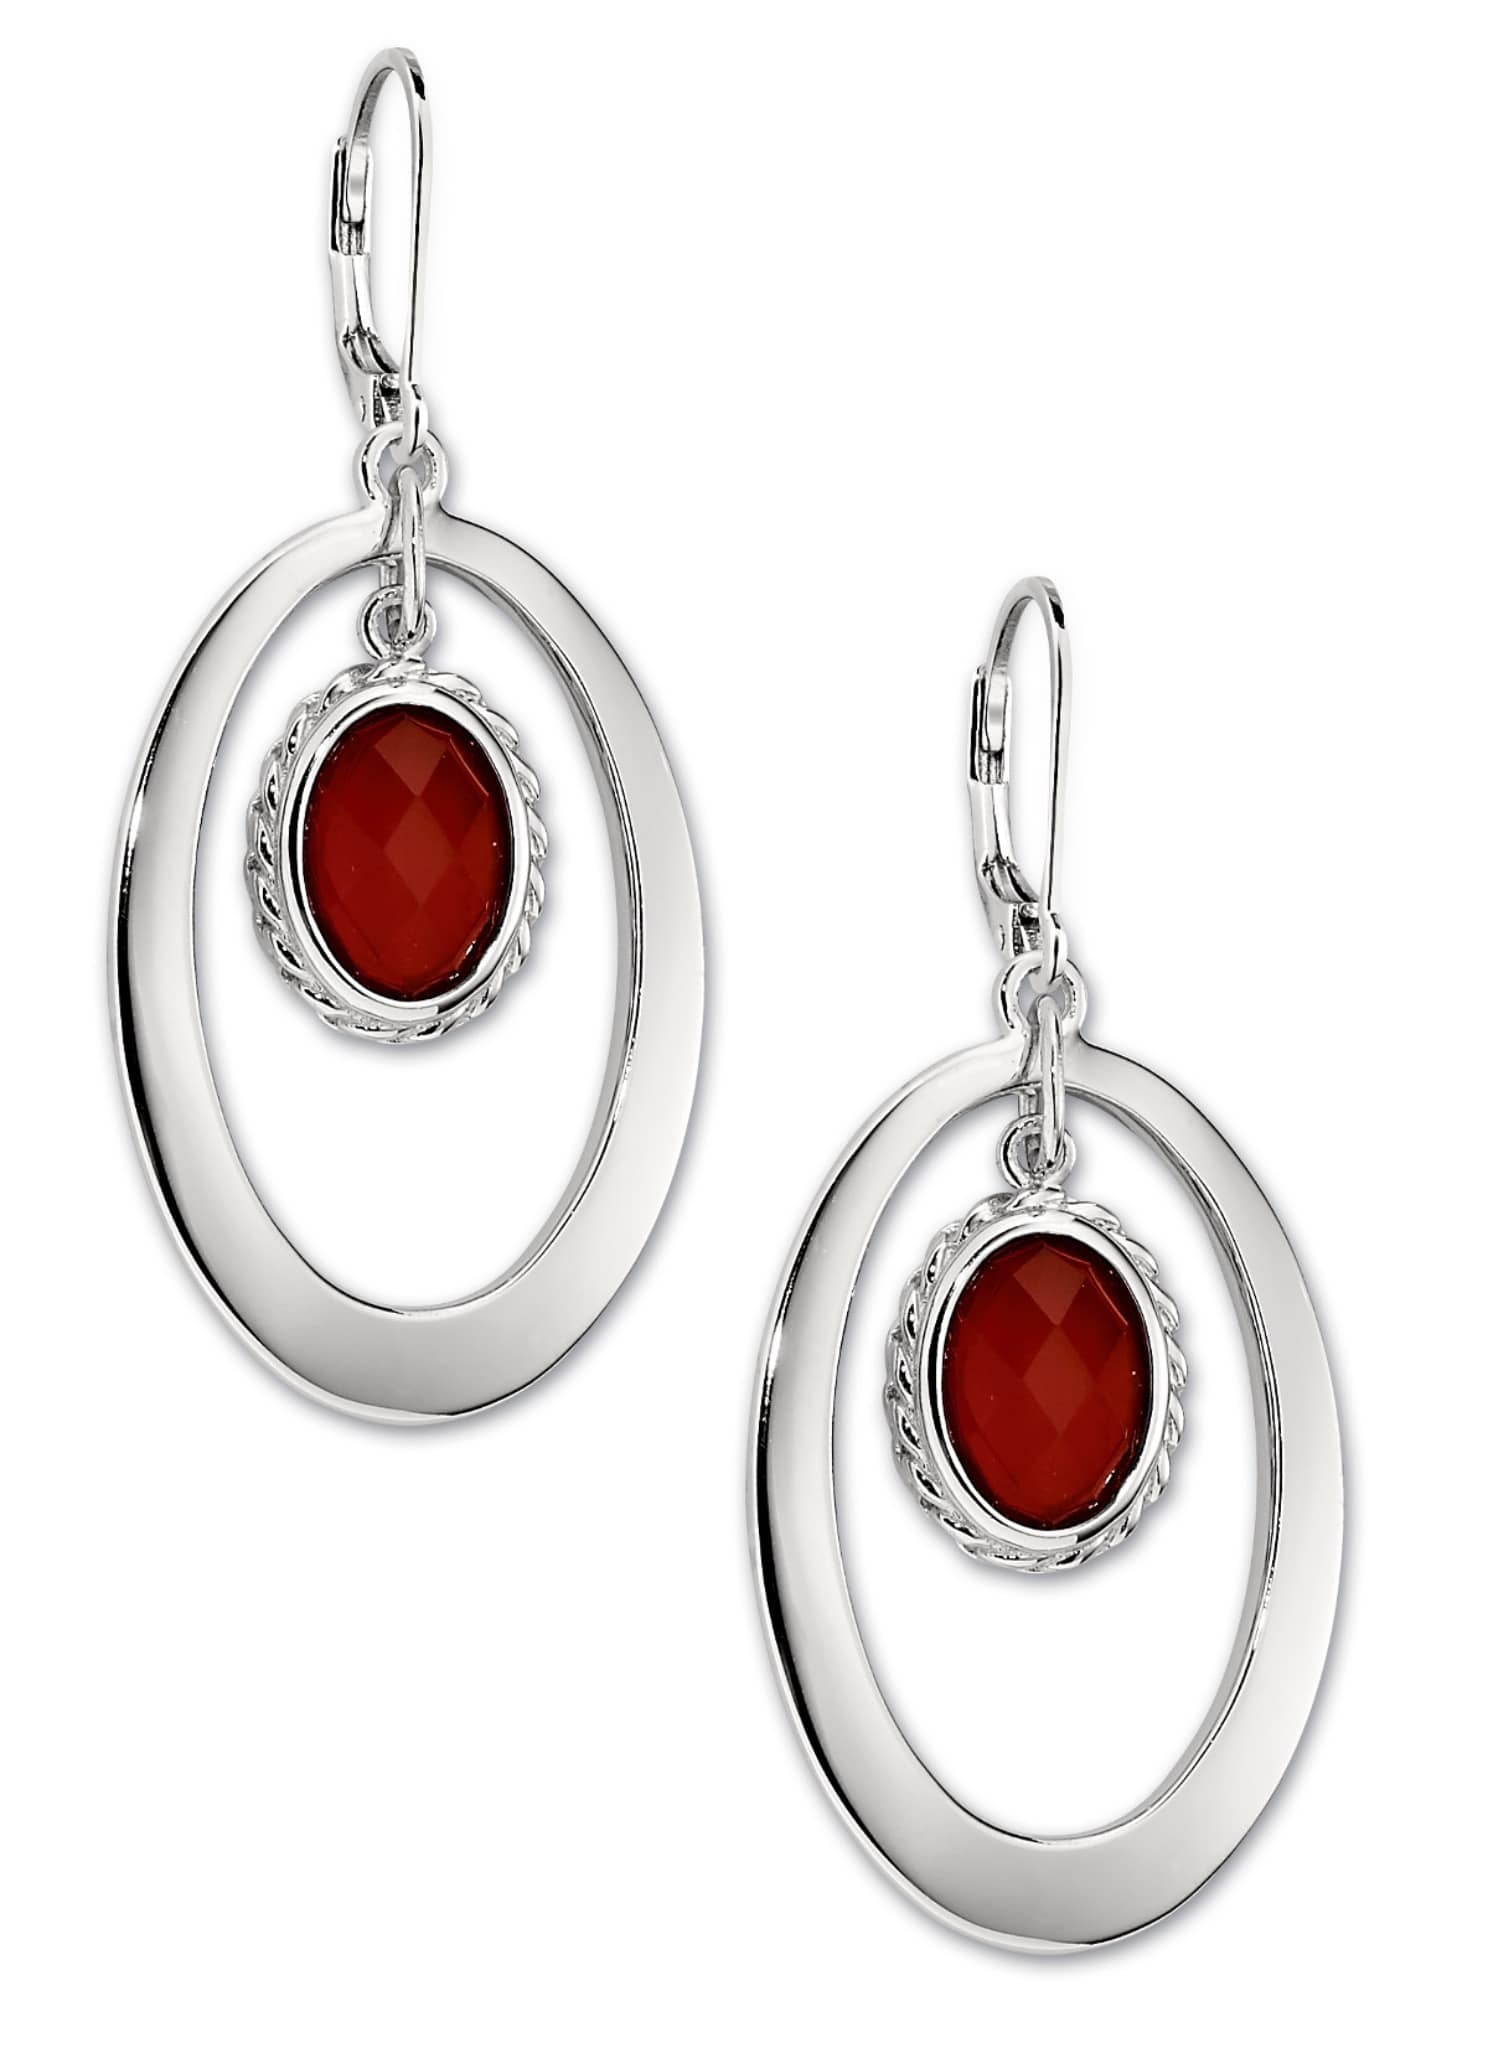 ELLE Perimeter Red Agate Silver Leverback Earrings at Arman's Jewellers